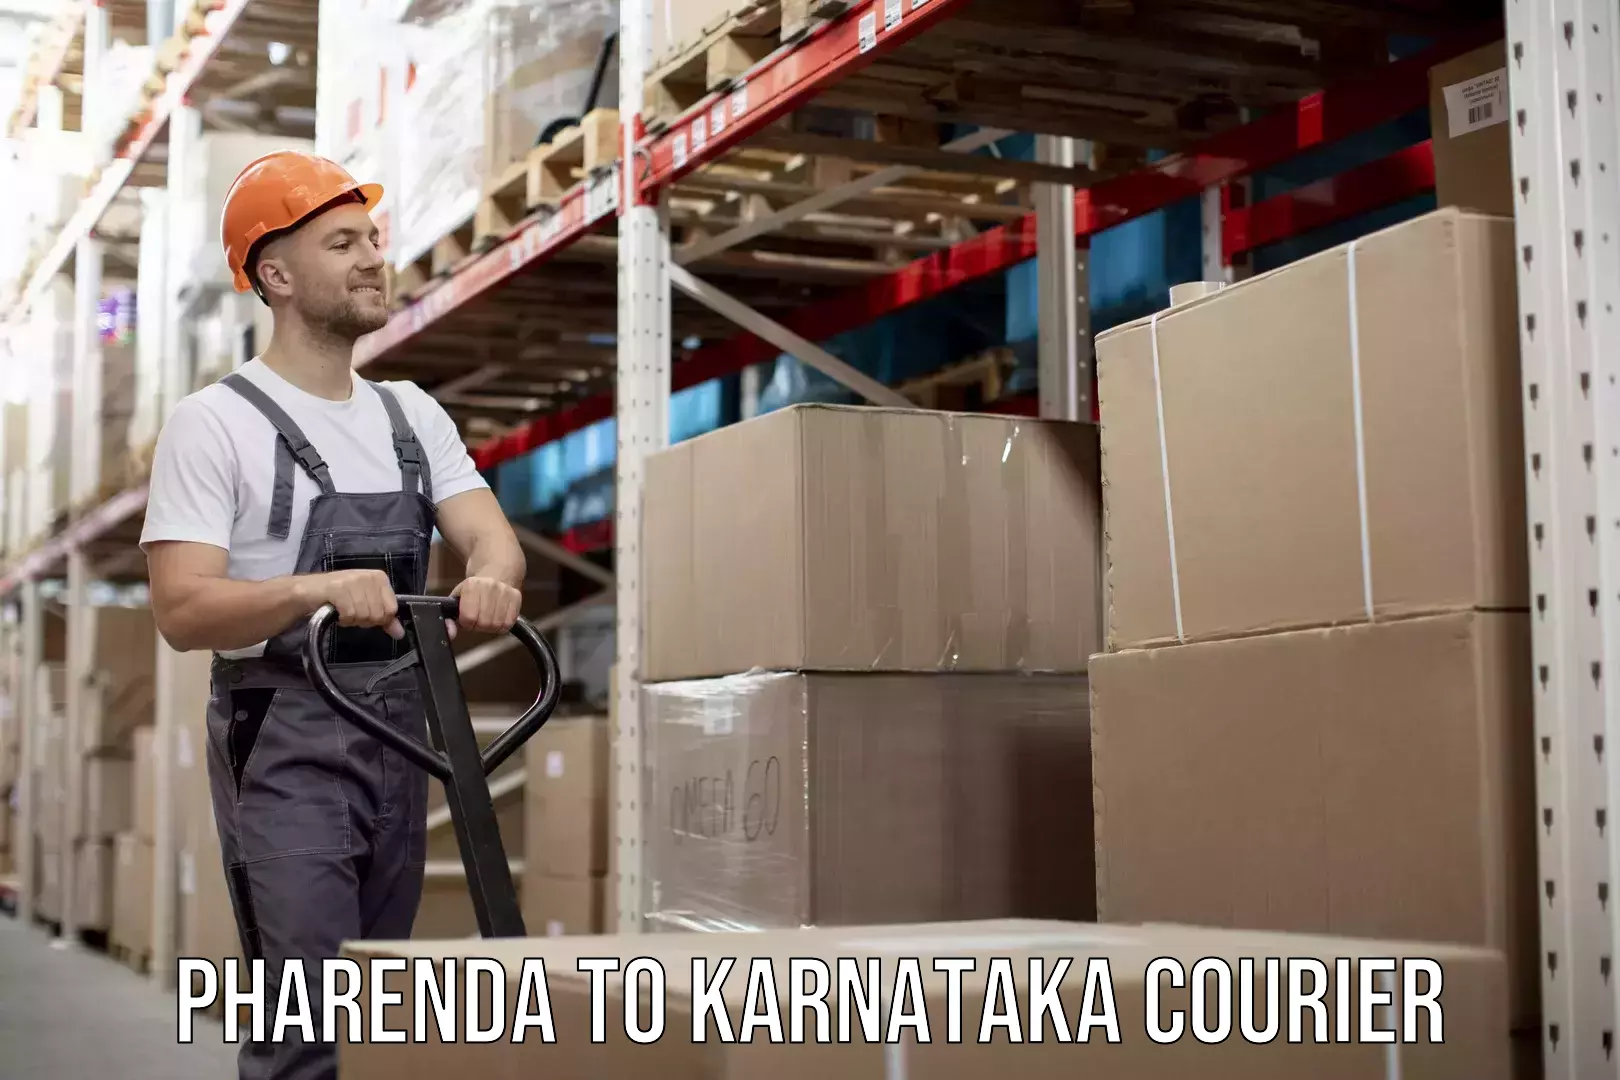 Professional moving company Pharenda to Karnataka